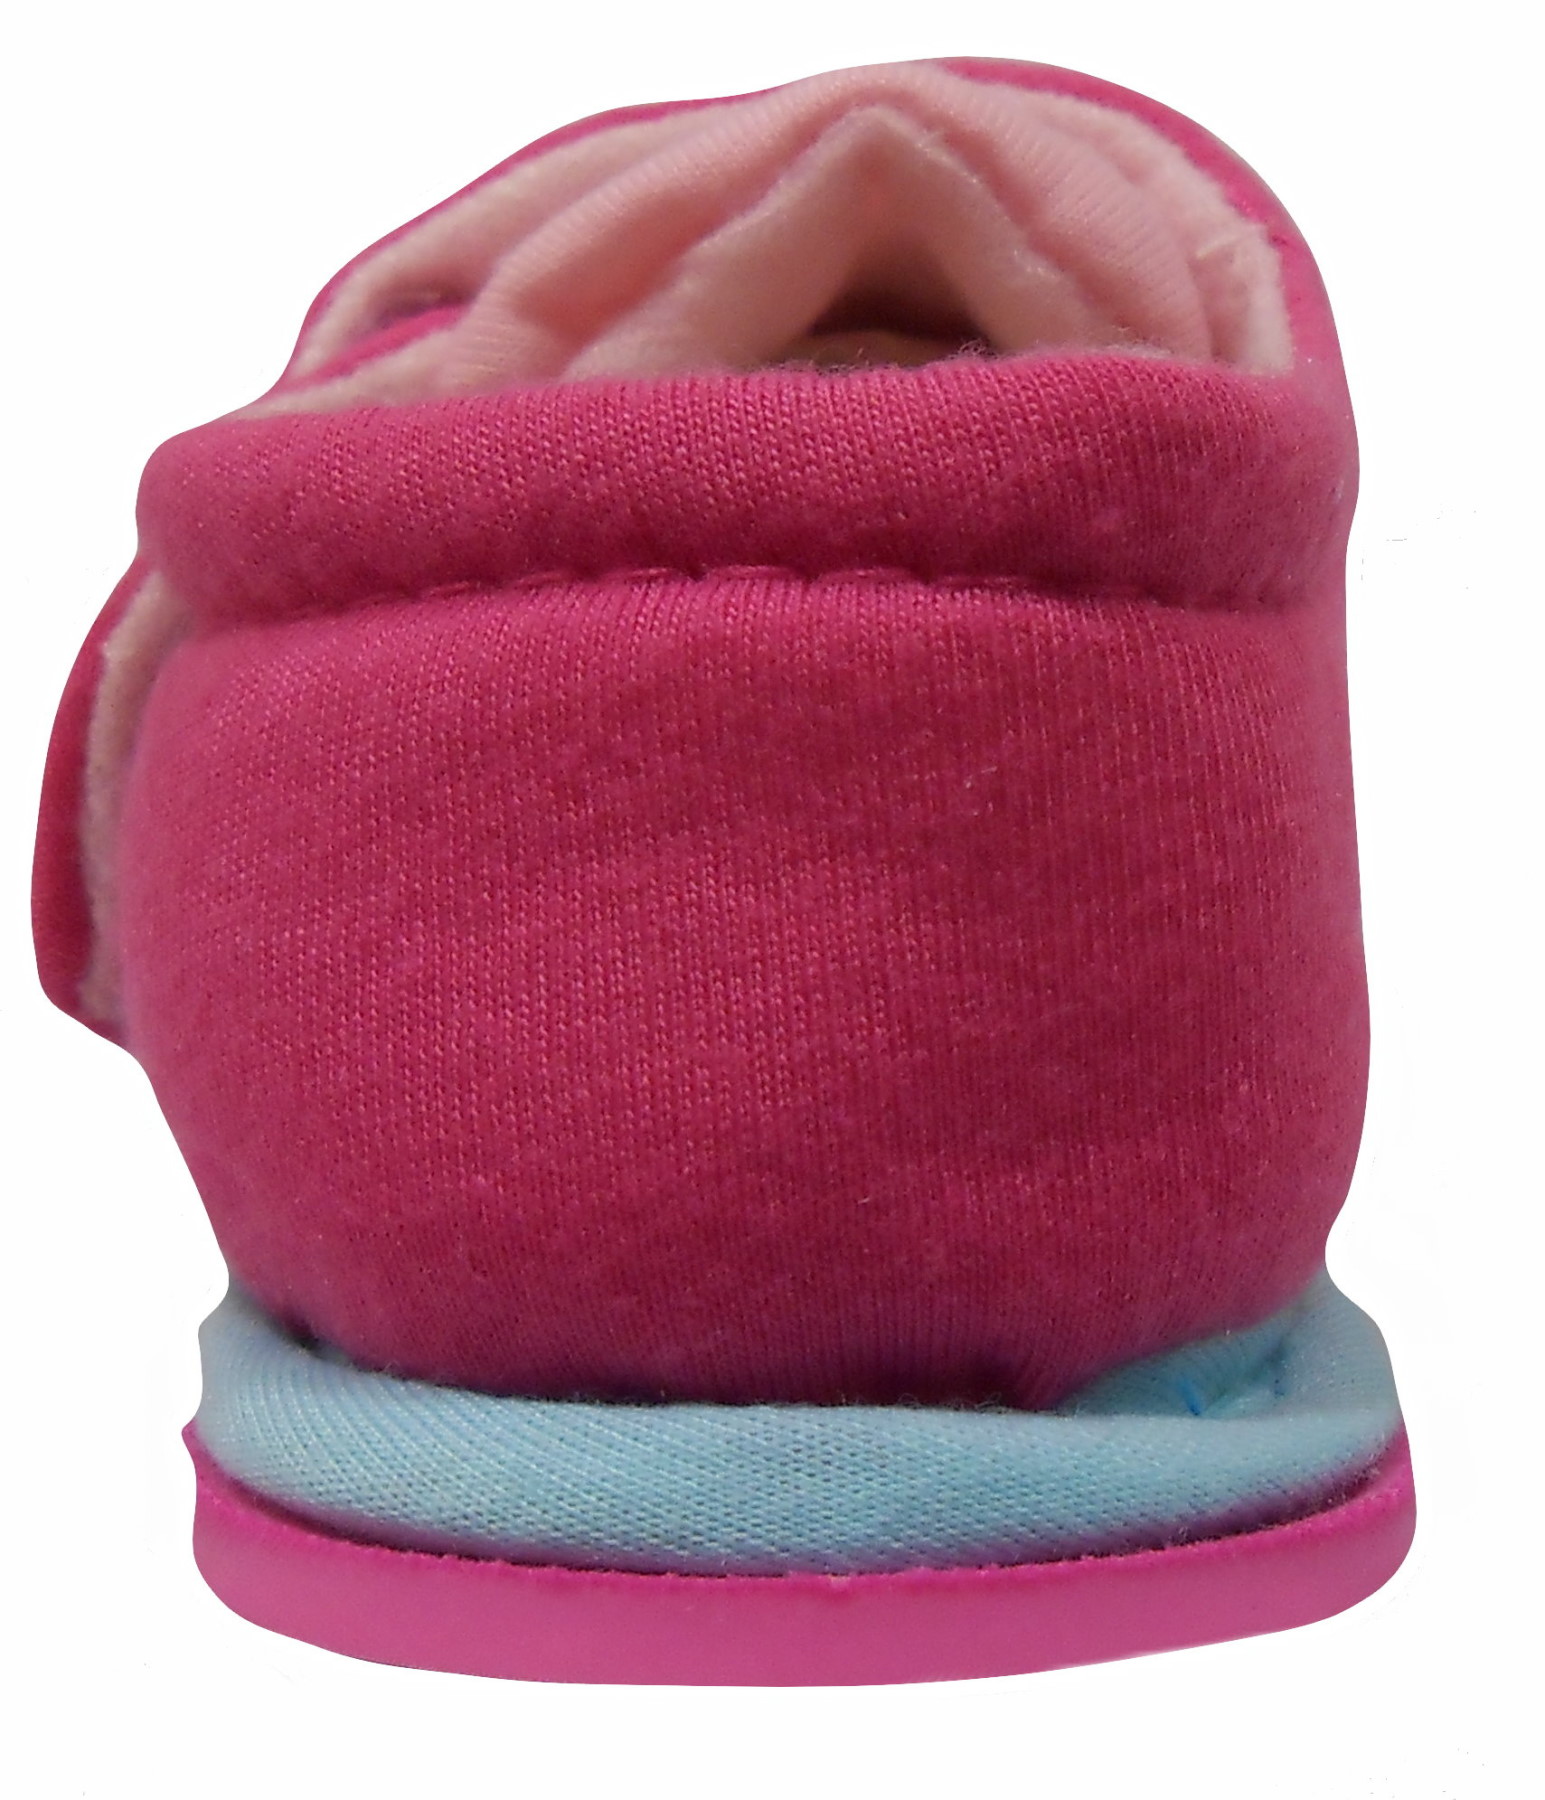 pink pwp 56991 slipper (3).JPG  by Thingimijigs